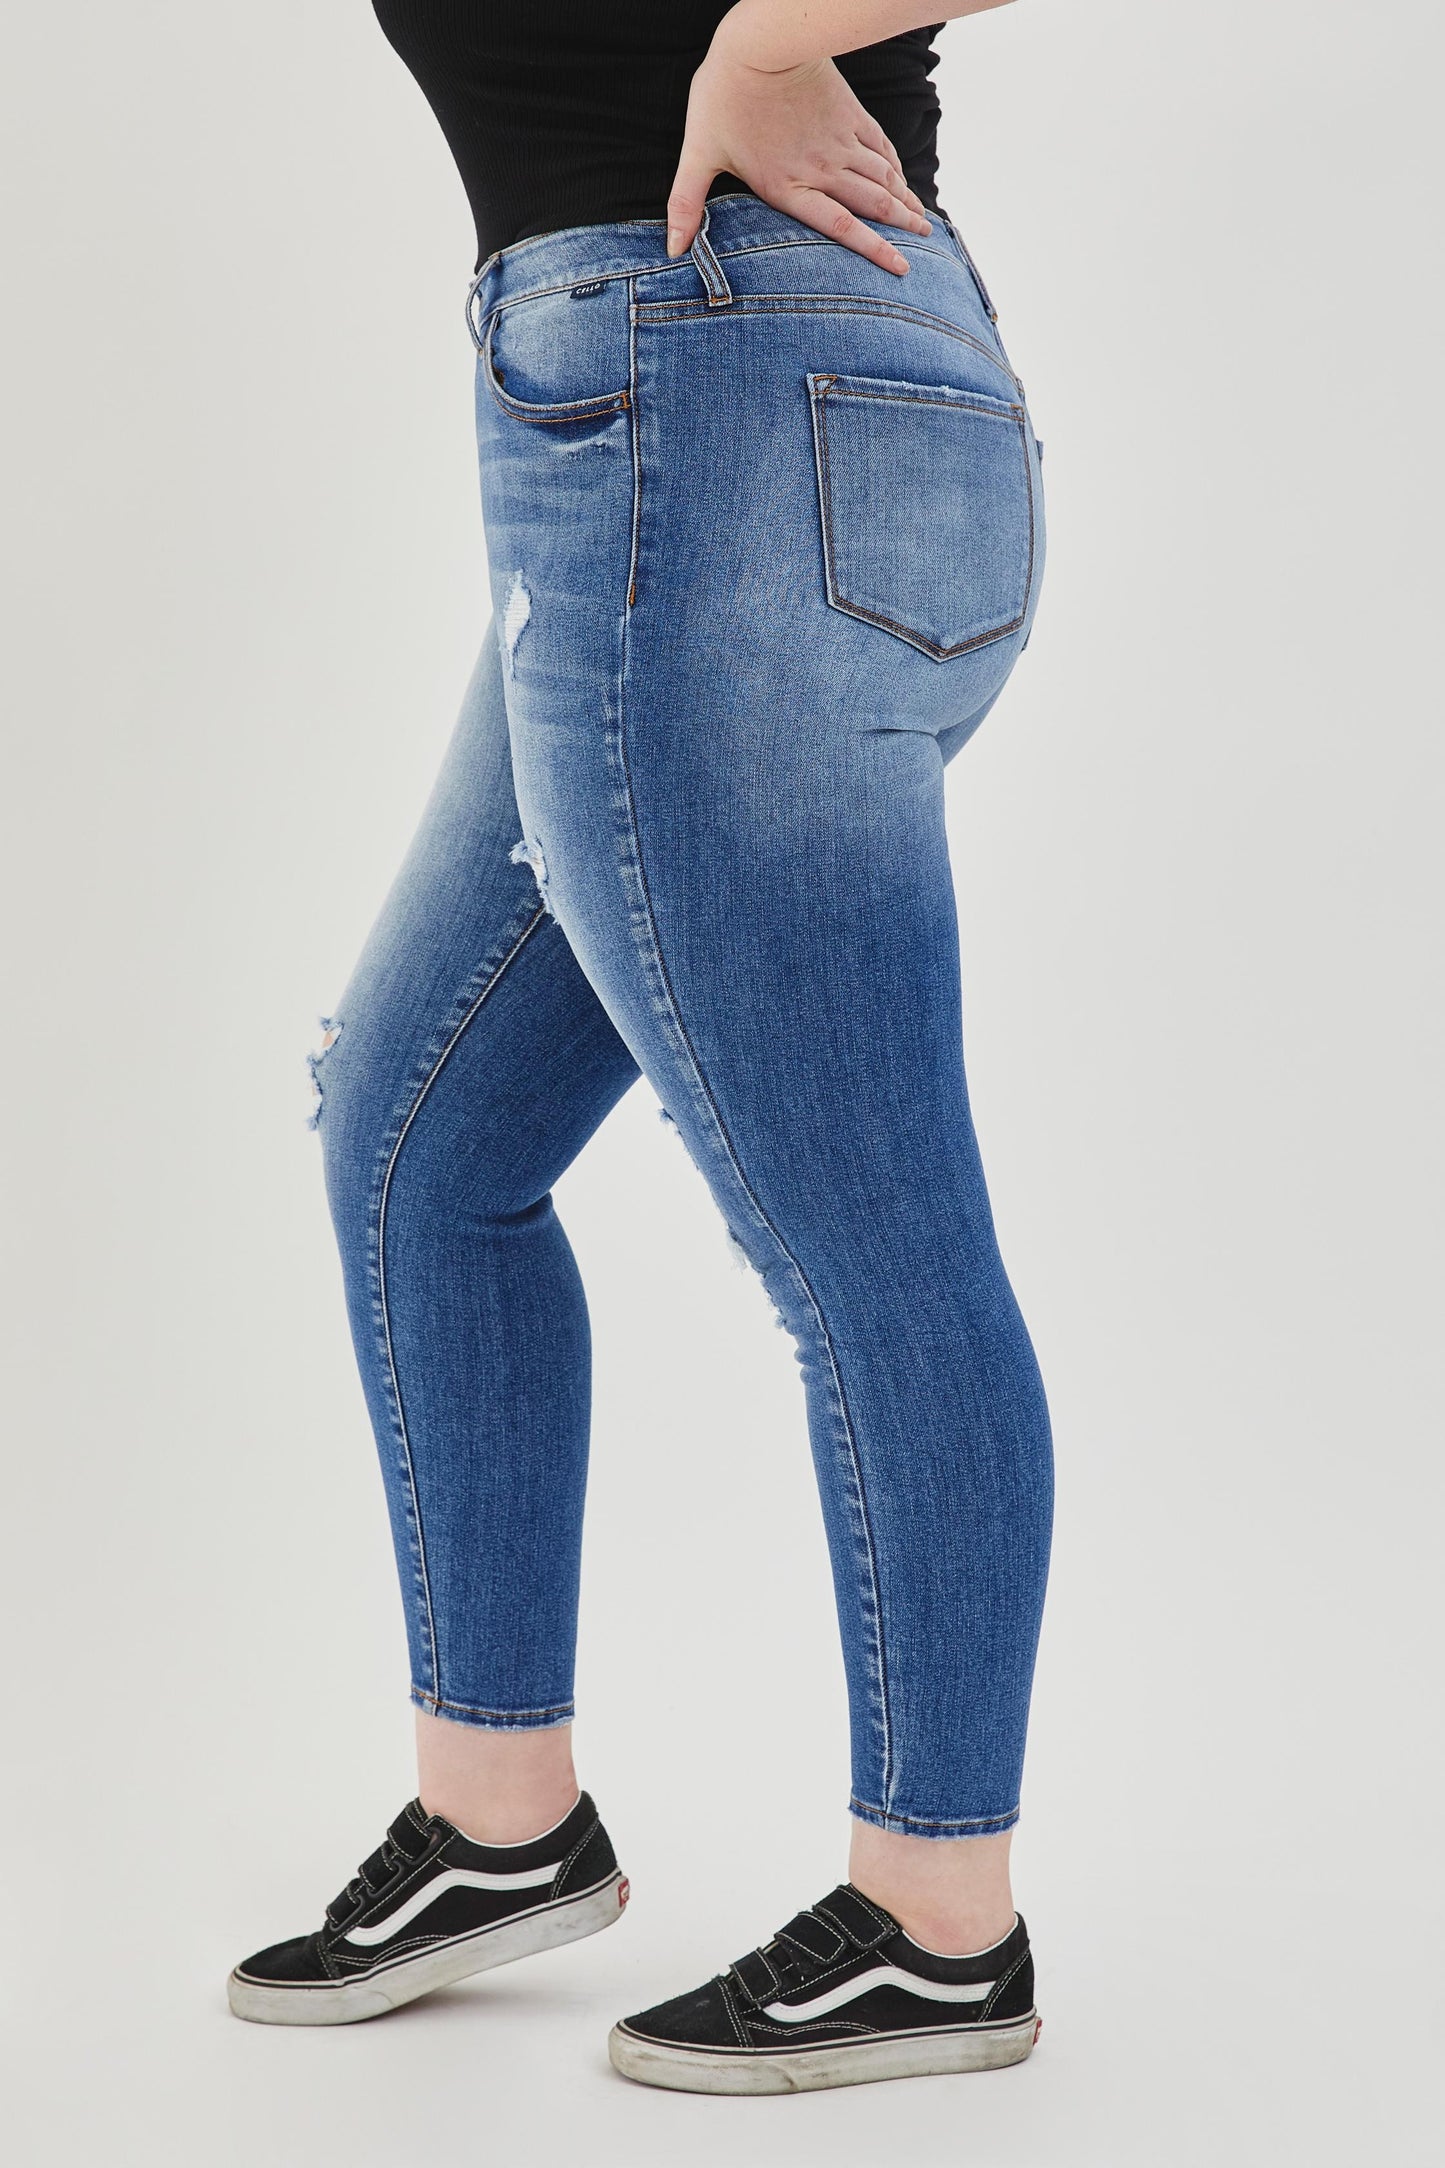 Le jean fashion taille haute #3